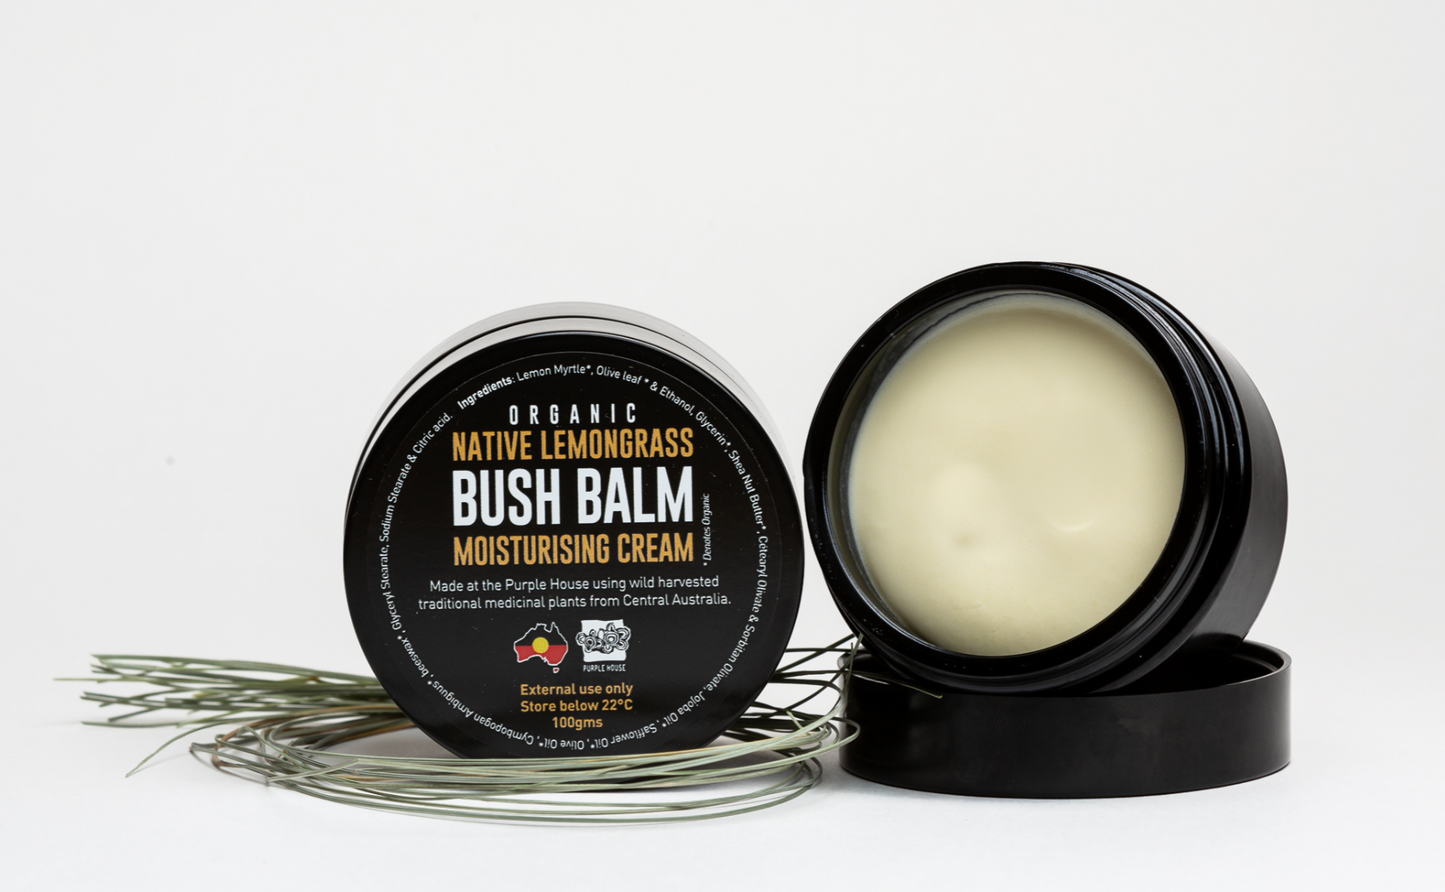 Bush Balm Social Enterprise - Organic Native Lemongrass Moisturising Cream 100g